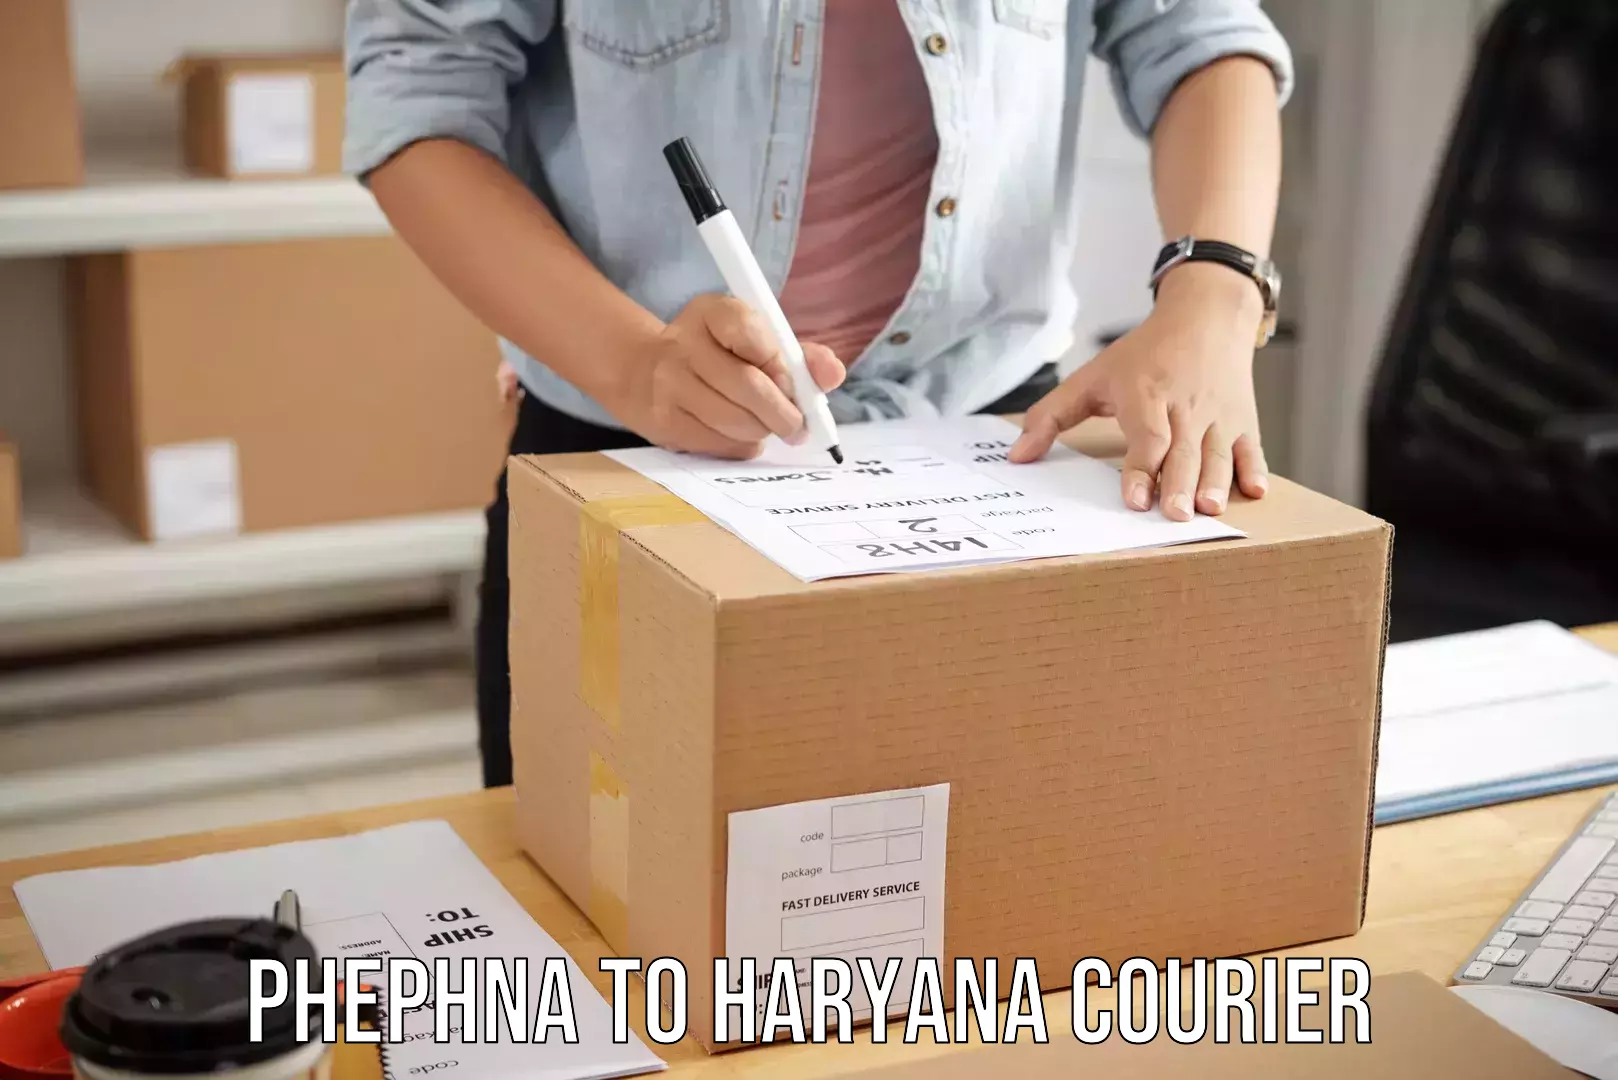 Emergency baggage service Phephna to NCR Haryana